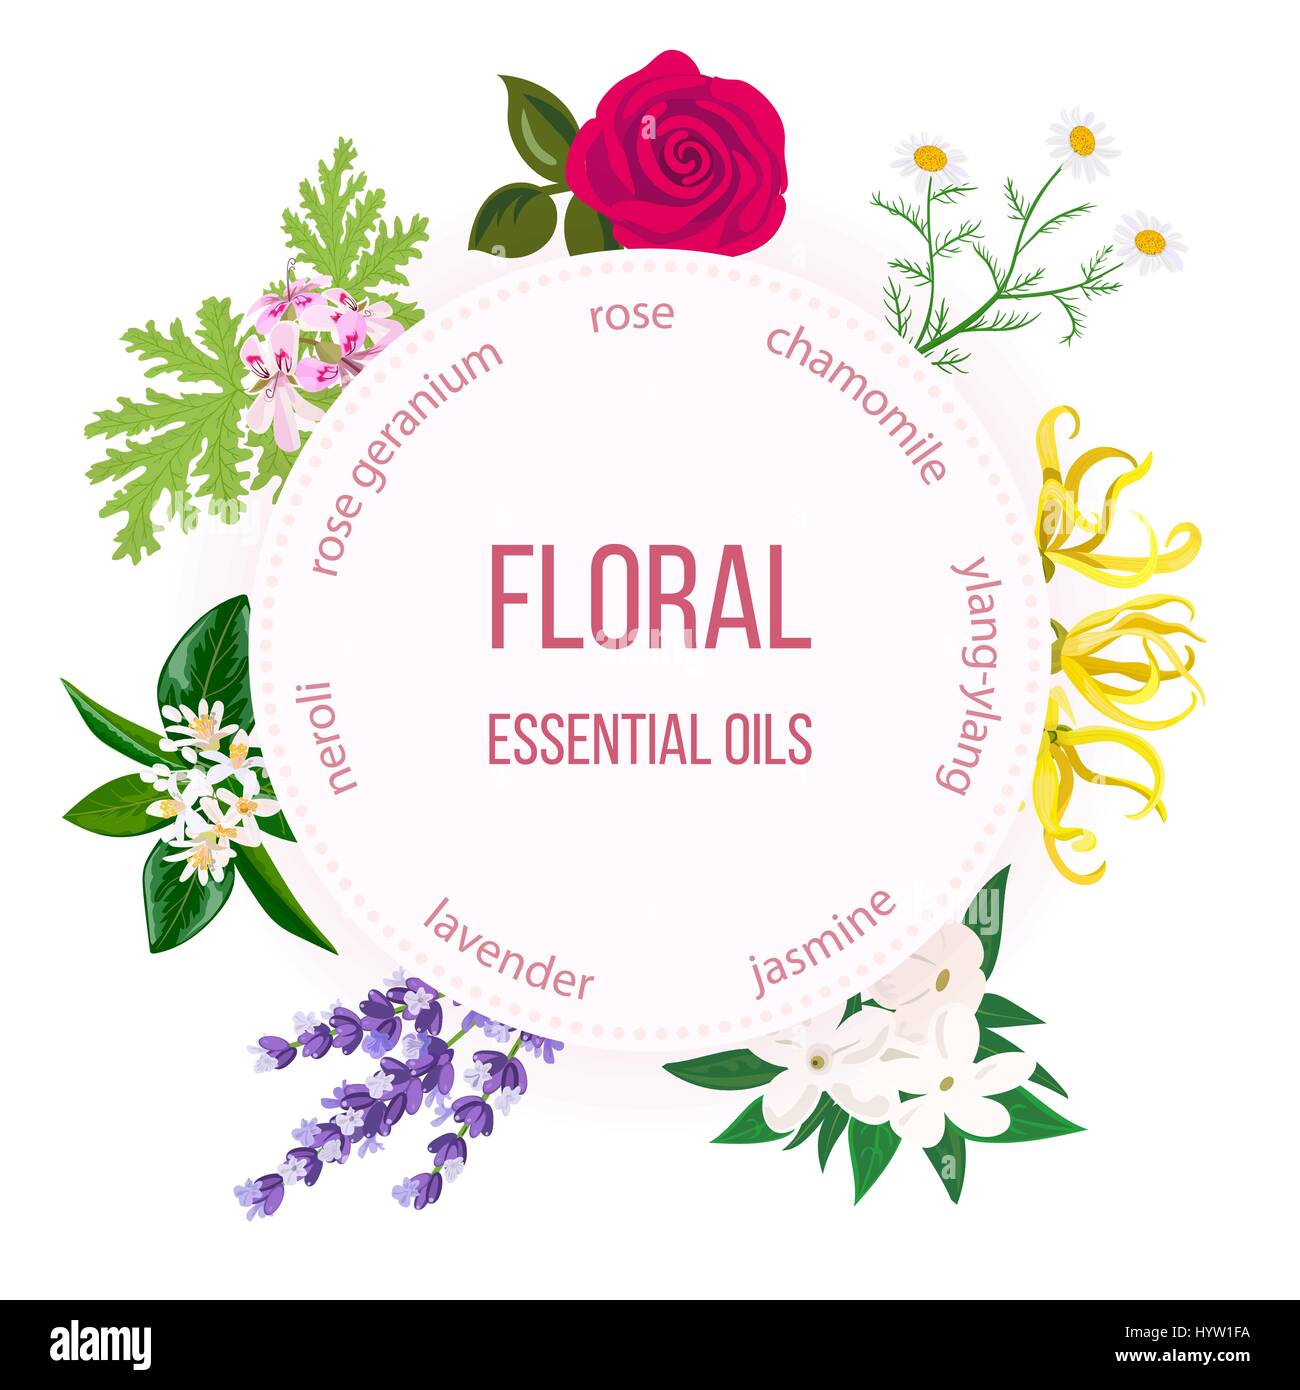 Essential oil labels set. Rose, Chamomile, jasmine, Ylang-ylang, , neroli, Lavender, rose Geranium. Round emblem. For cosmetics perfume health care pr Stock Vector